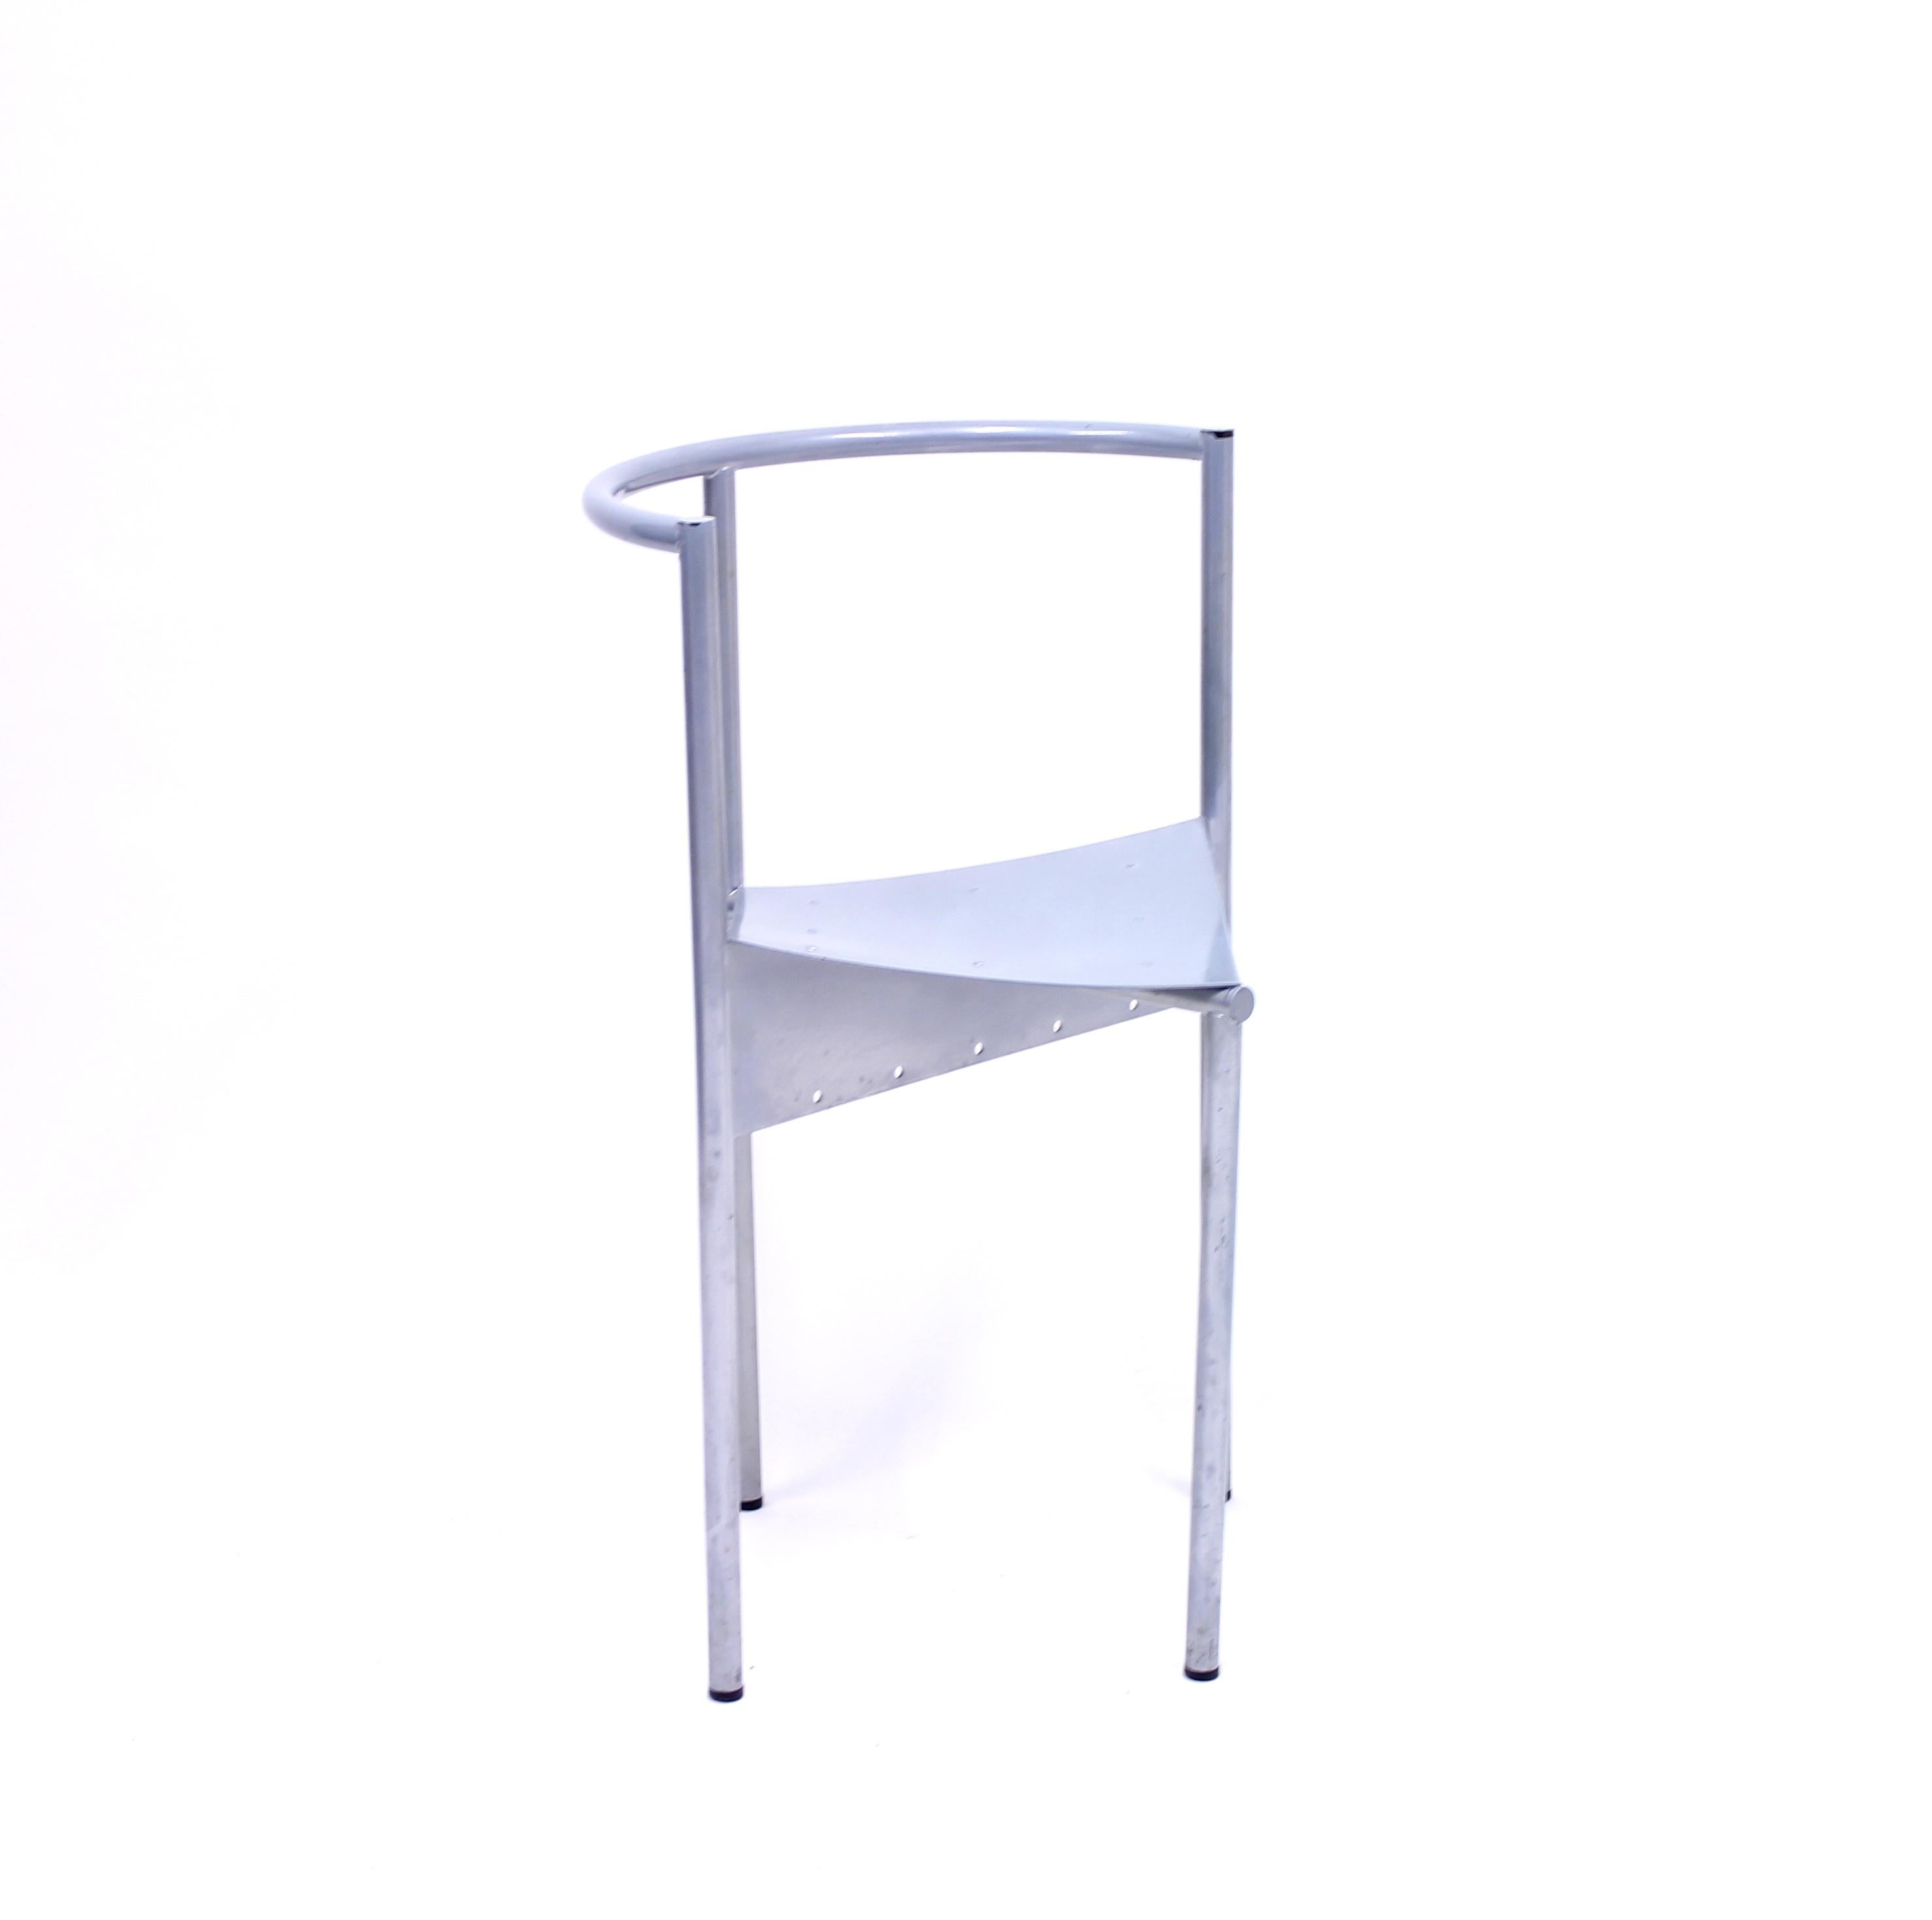 Spanish Philippe Starck, Wendy Wright Chair, Disform, 1986